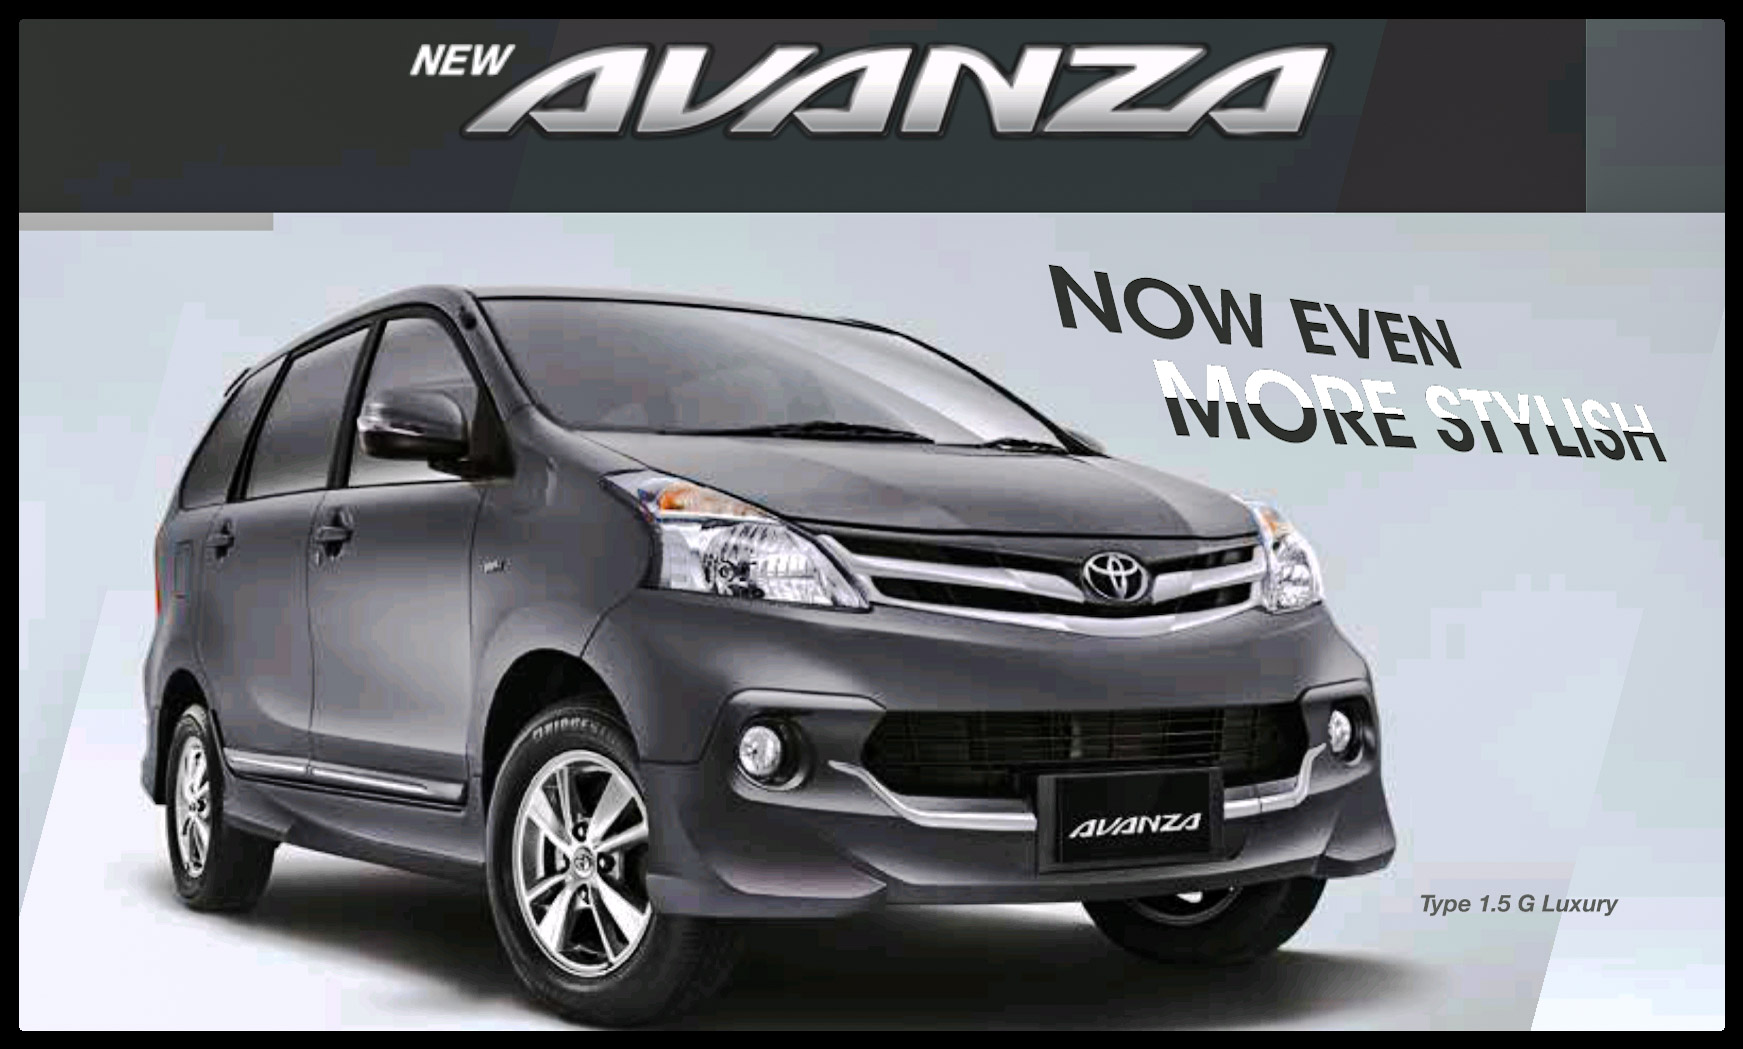 ALL NEW AVANZA IMPROVMENT 2015 ToyotaMakassarorg